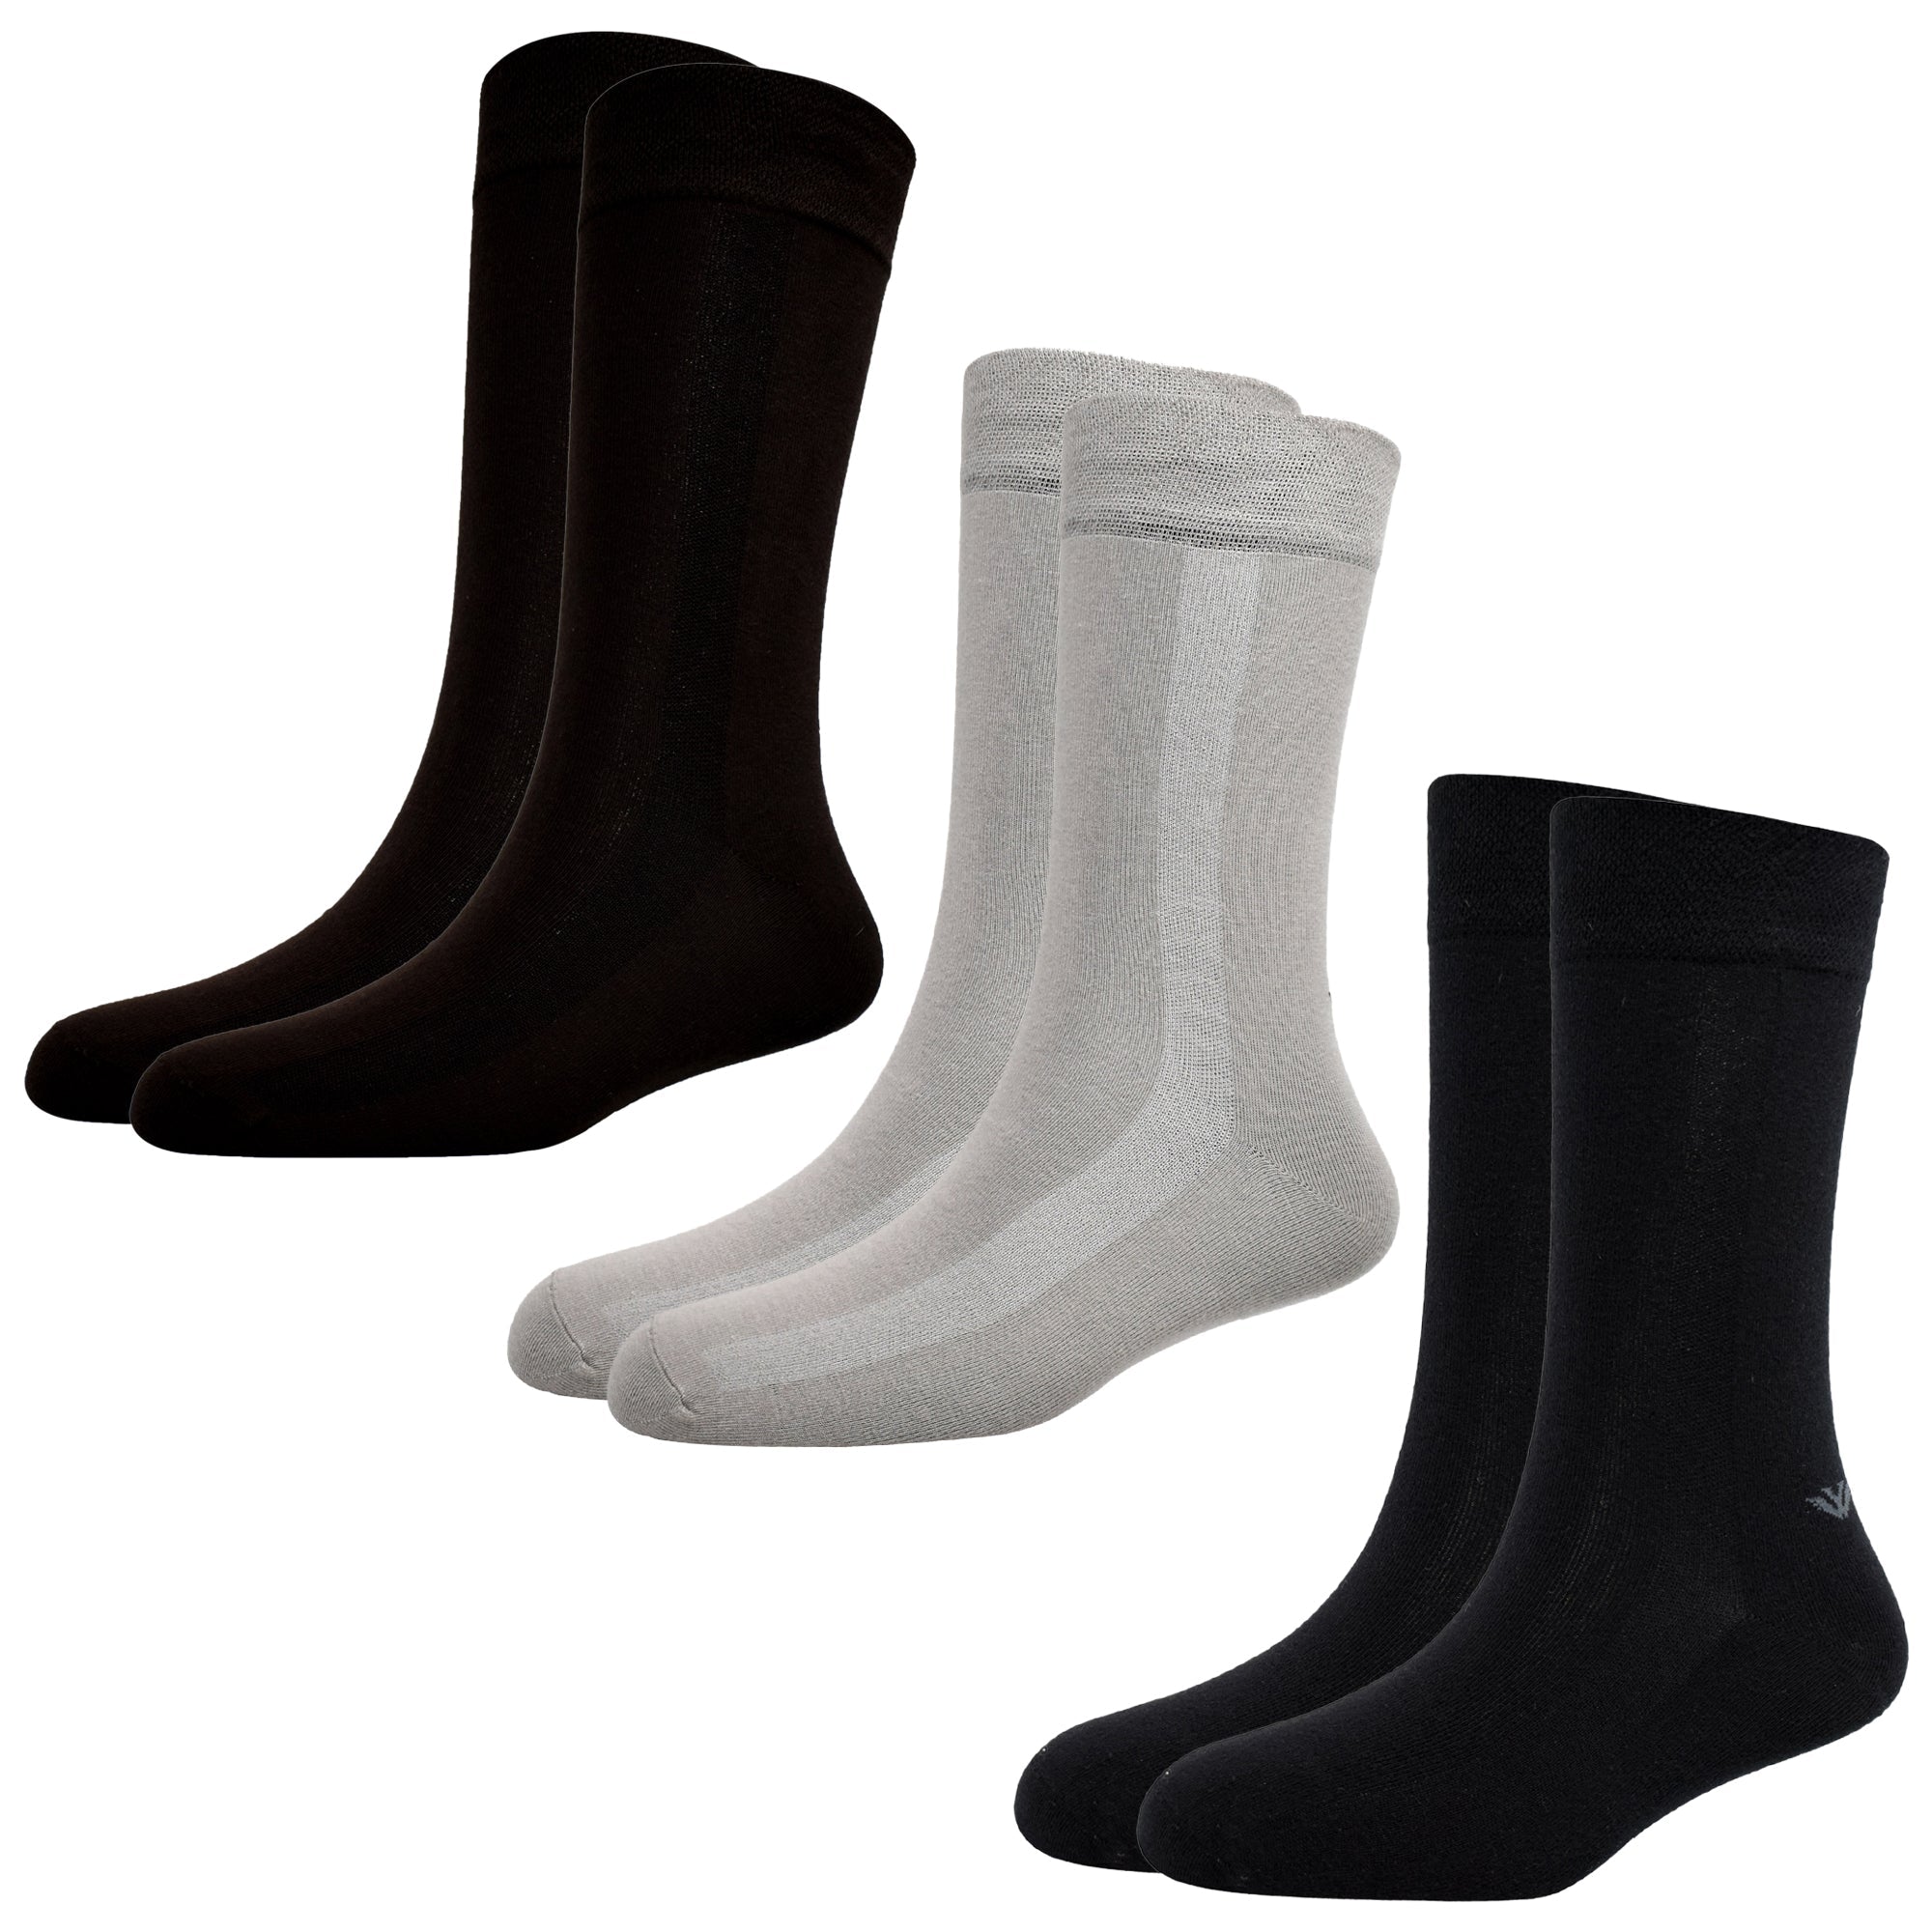 Men's HEALTH Crew Socks - Pack of 3 pairs